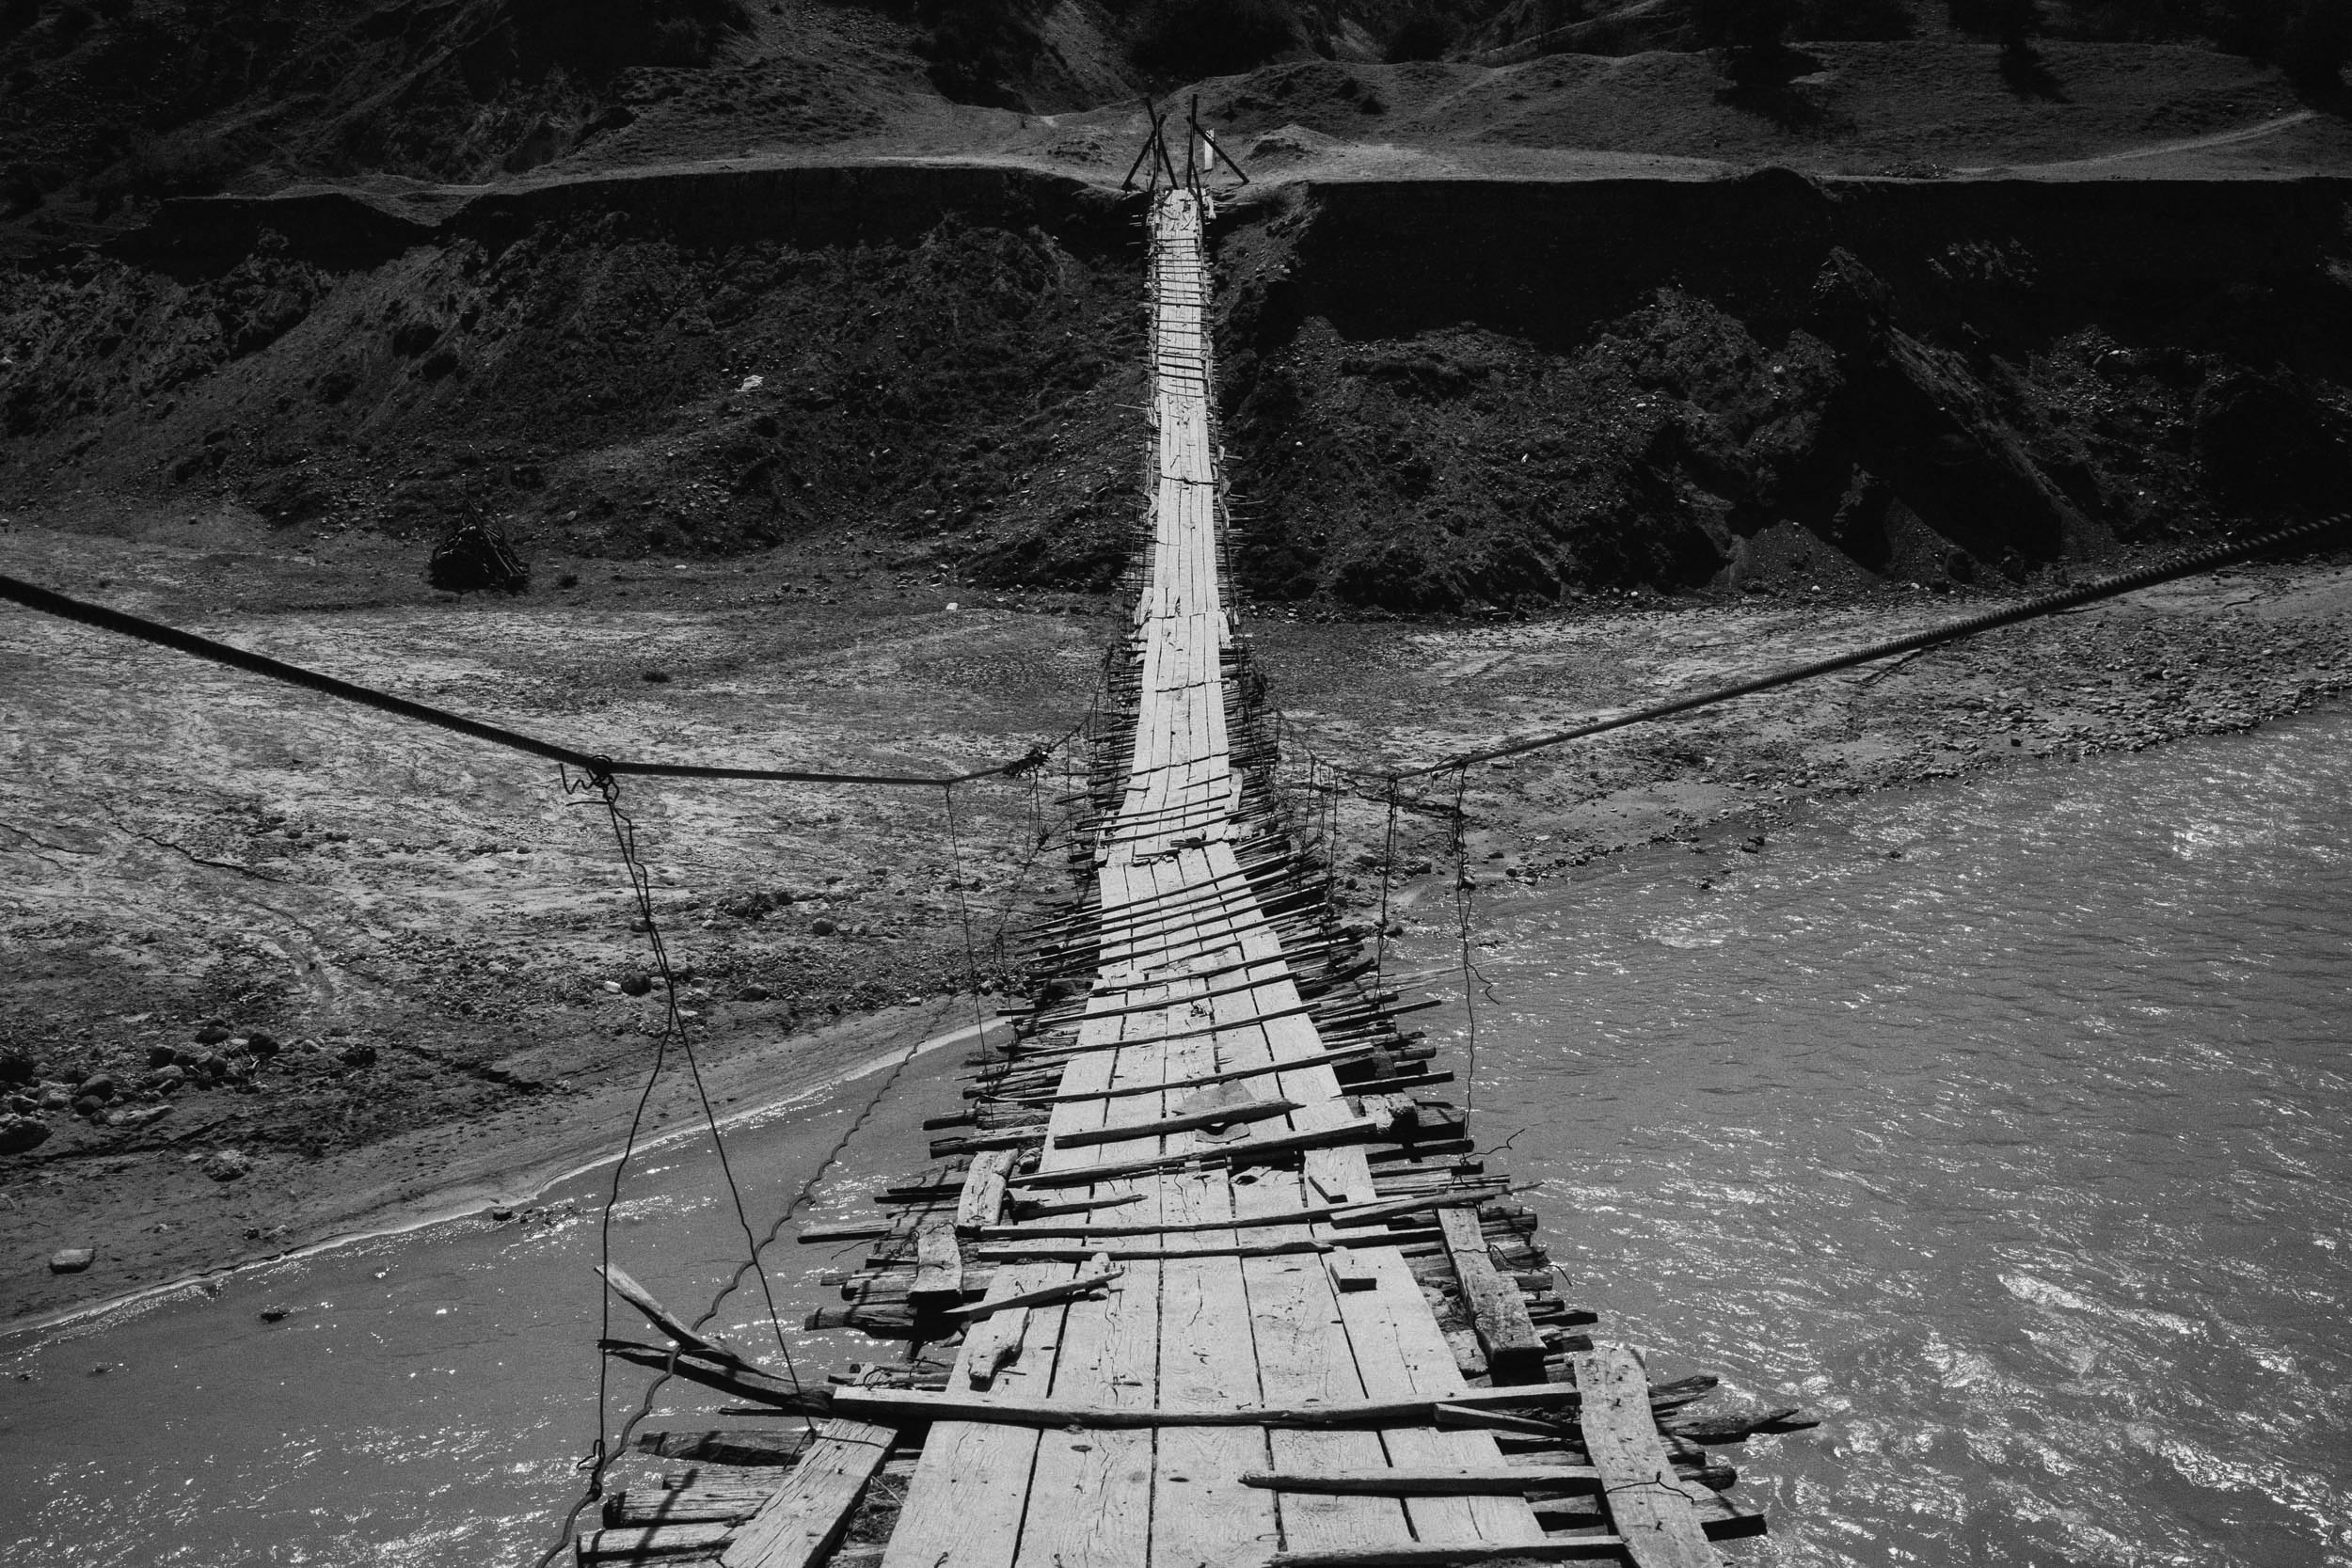 Rickety wooden bridge across a river